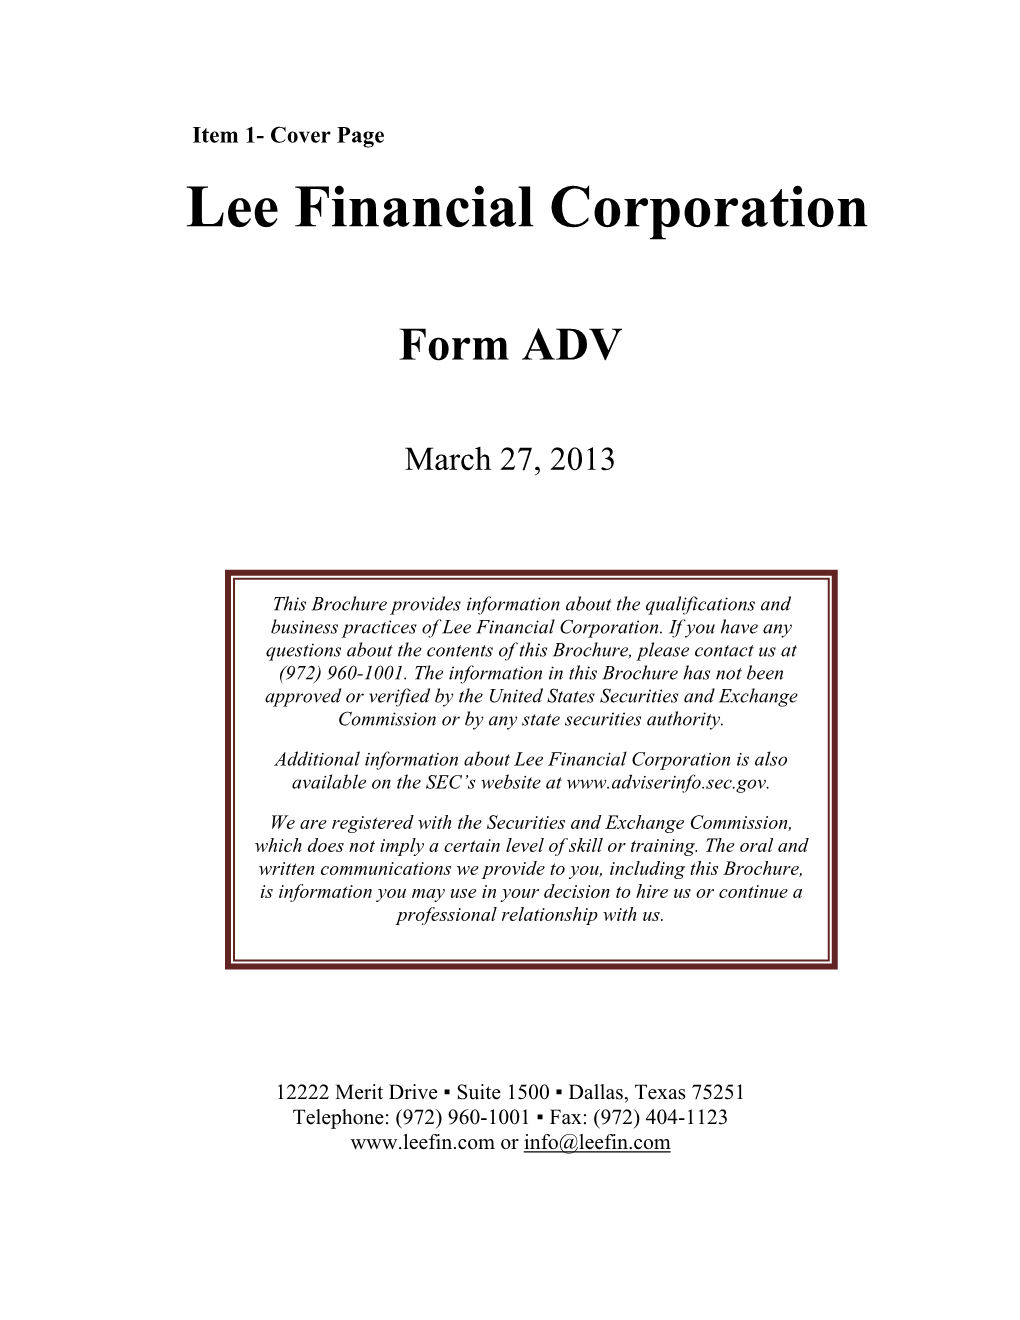 Lee Financial Corporation